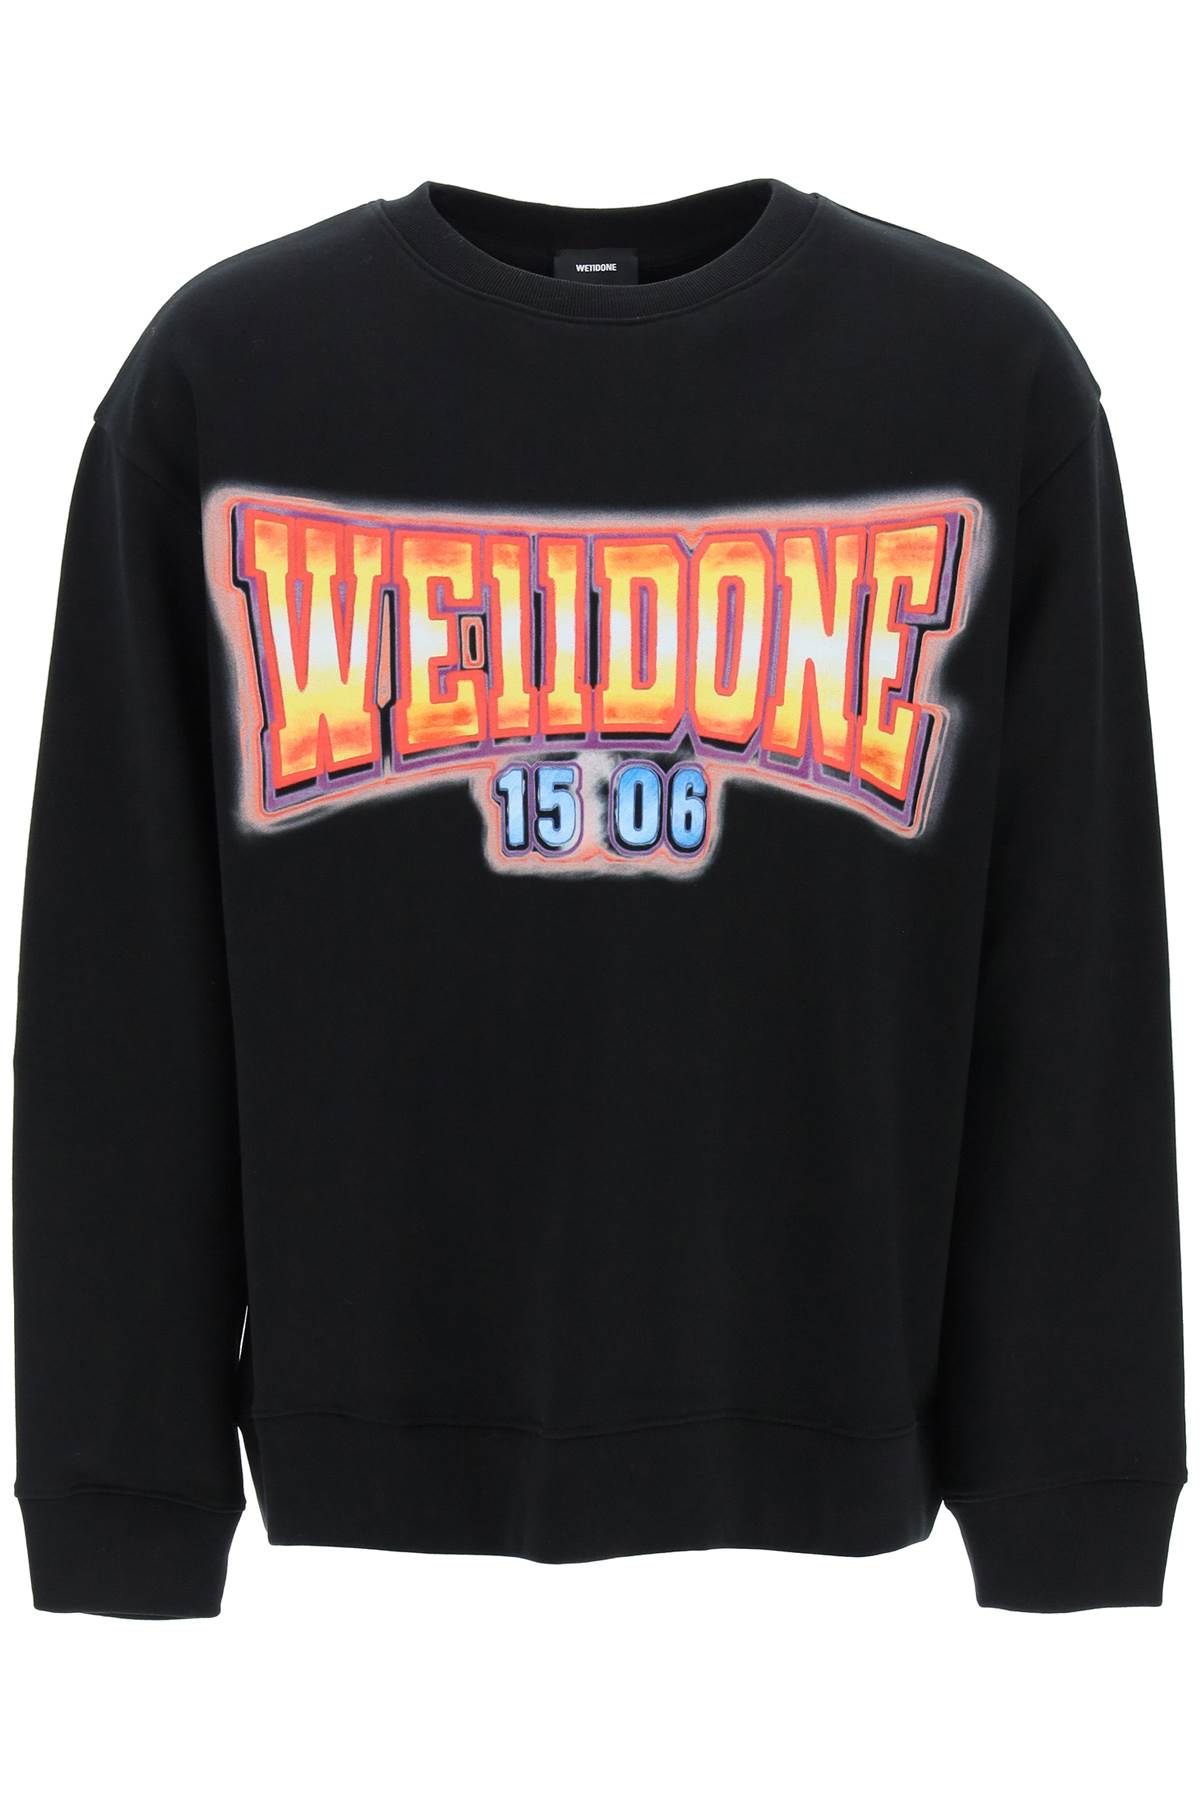 WE11 DONE Hollywood Logo Sweatshirt